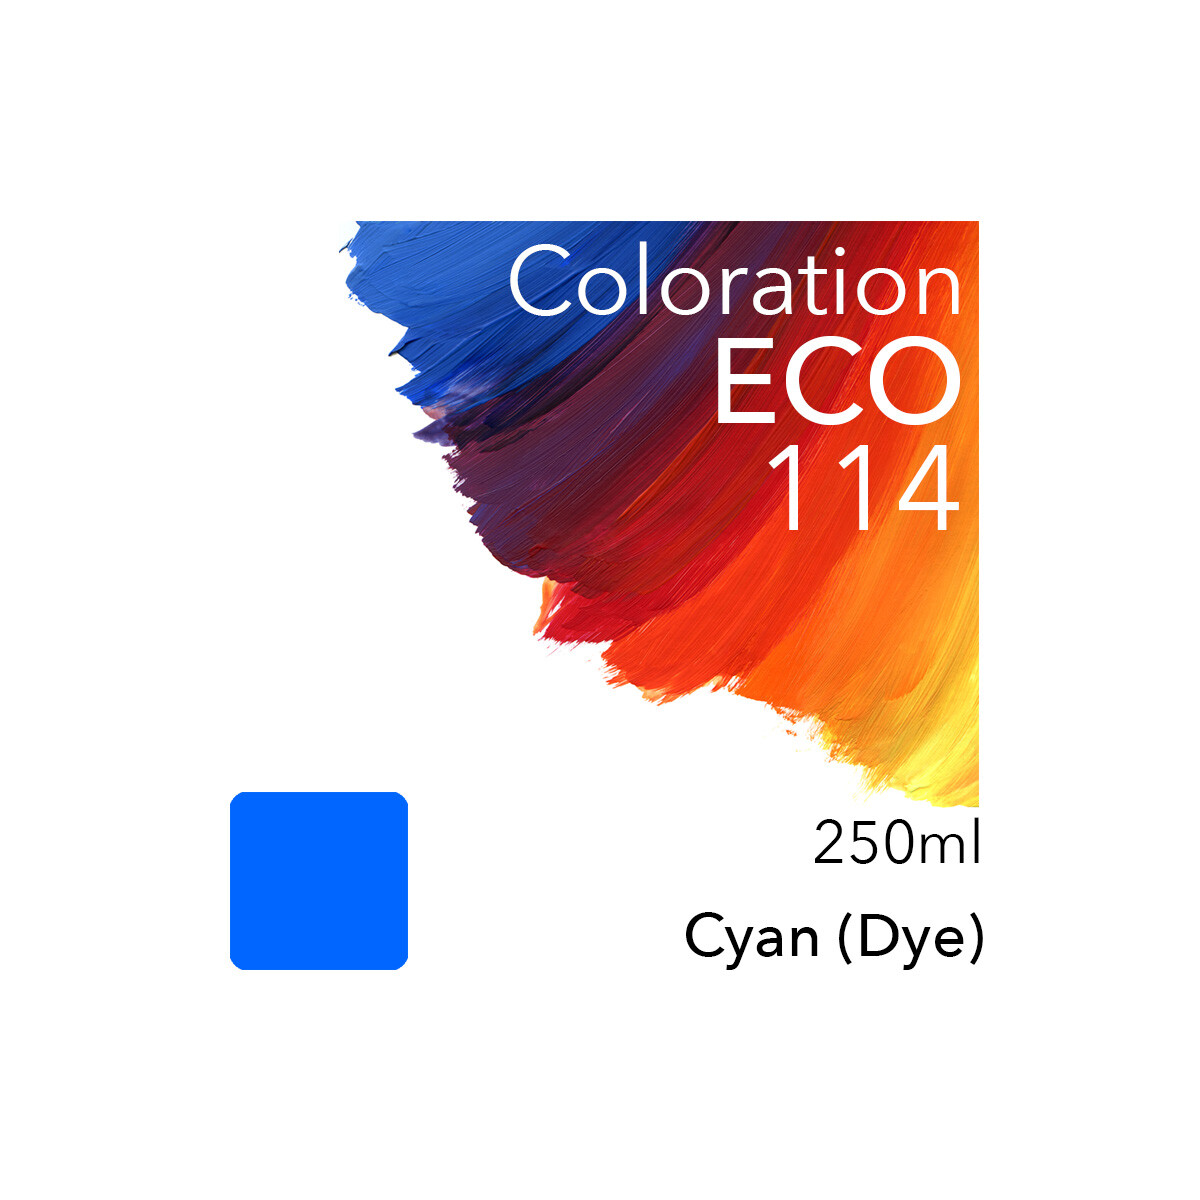 Coloration ECO kompatibel zu Epson 114 C (Cyan) 250ml